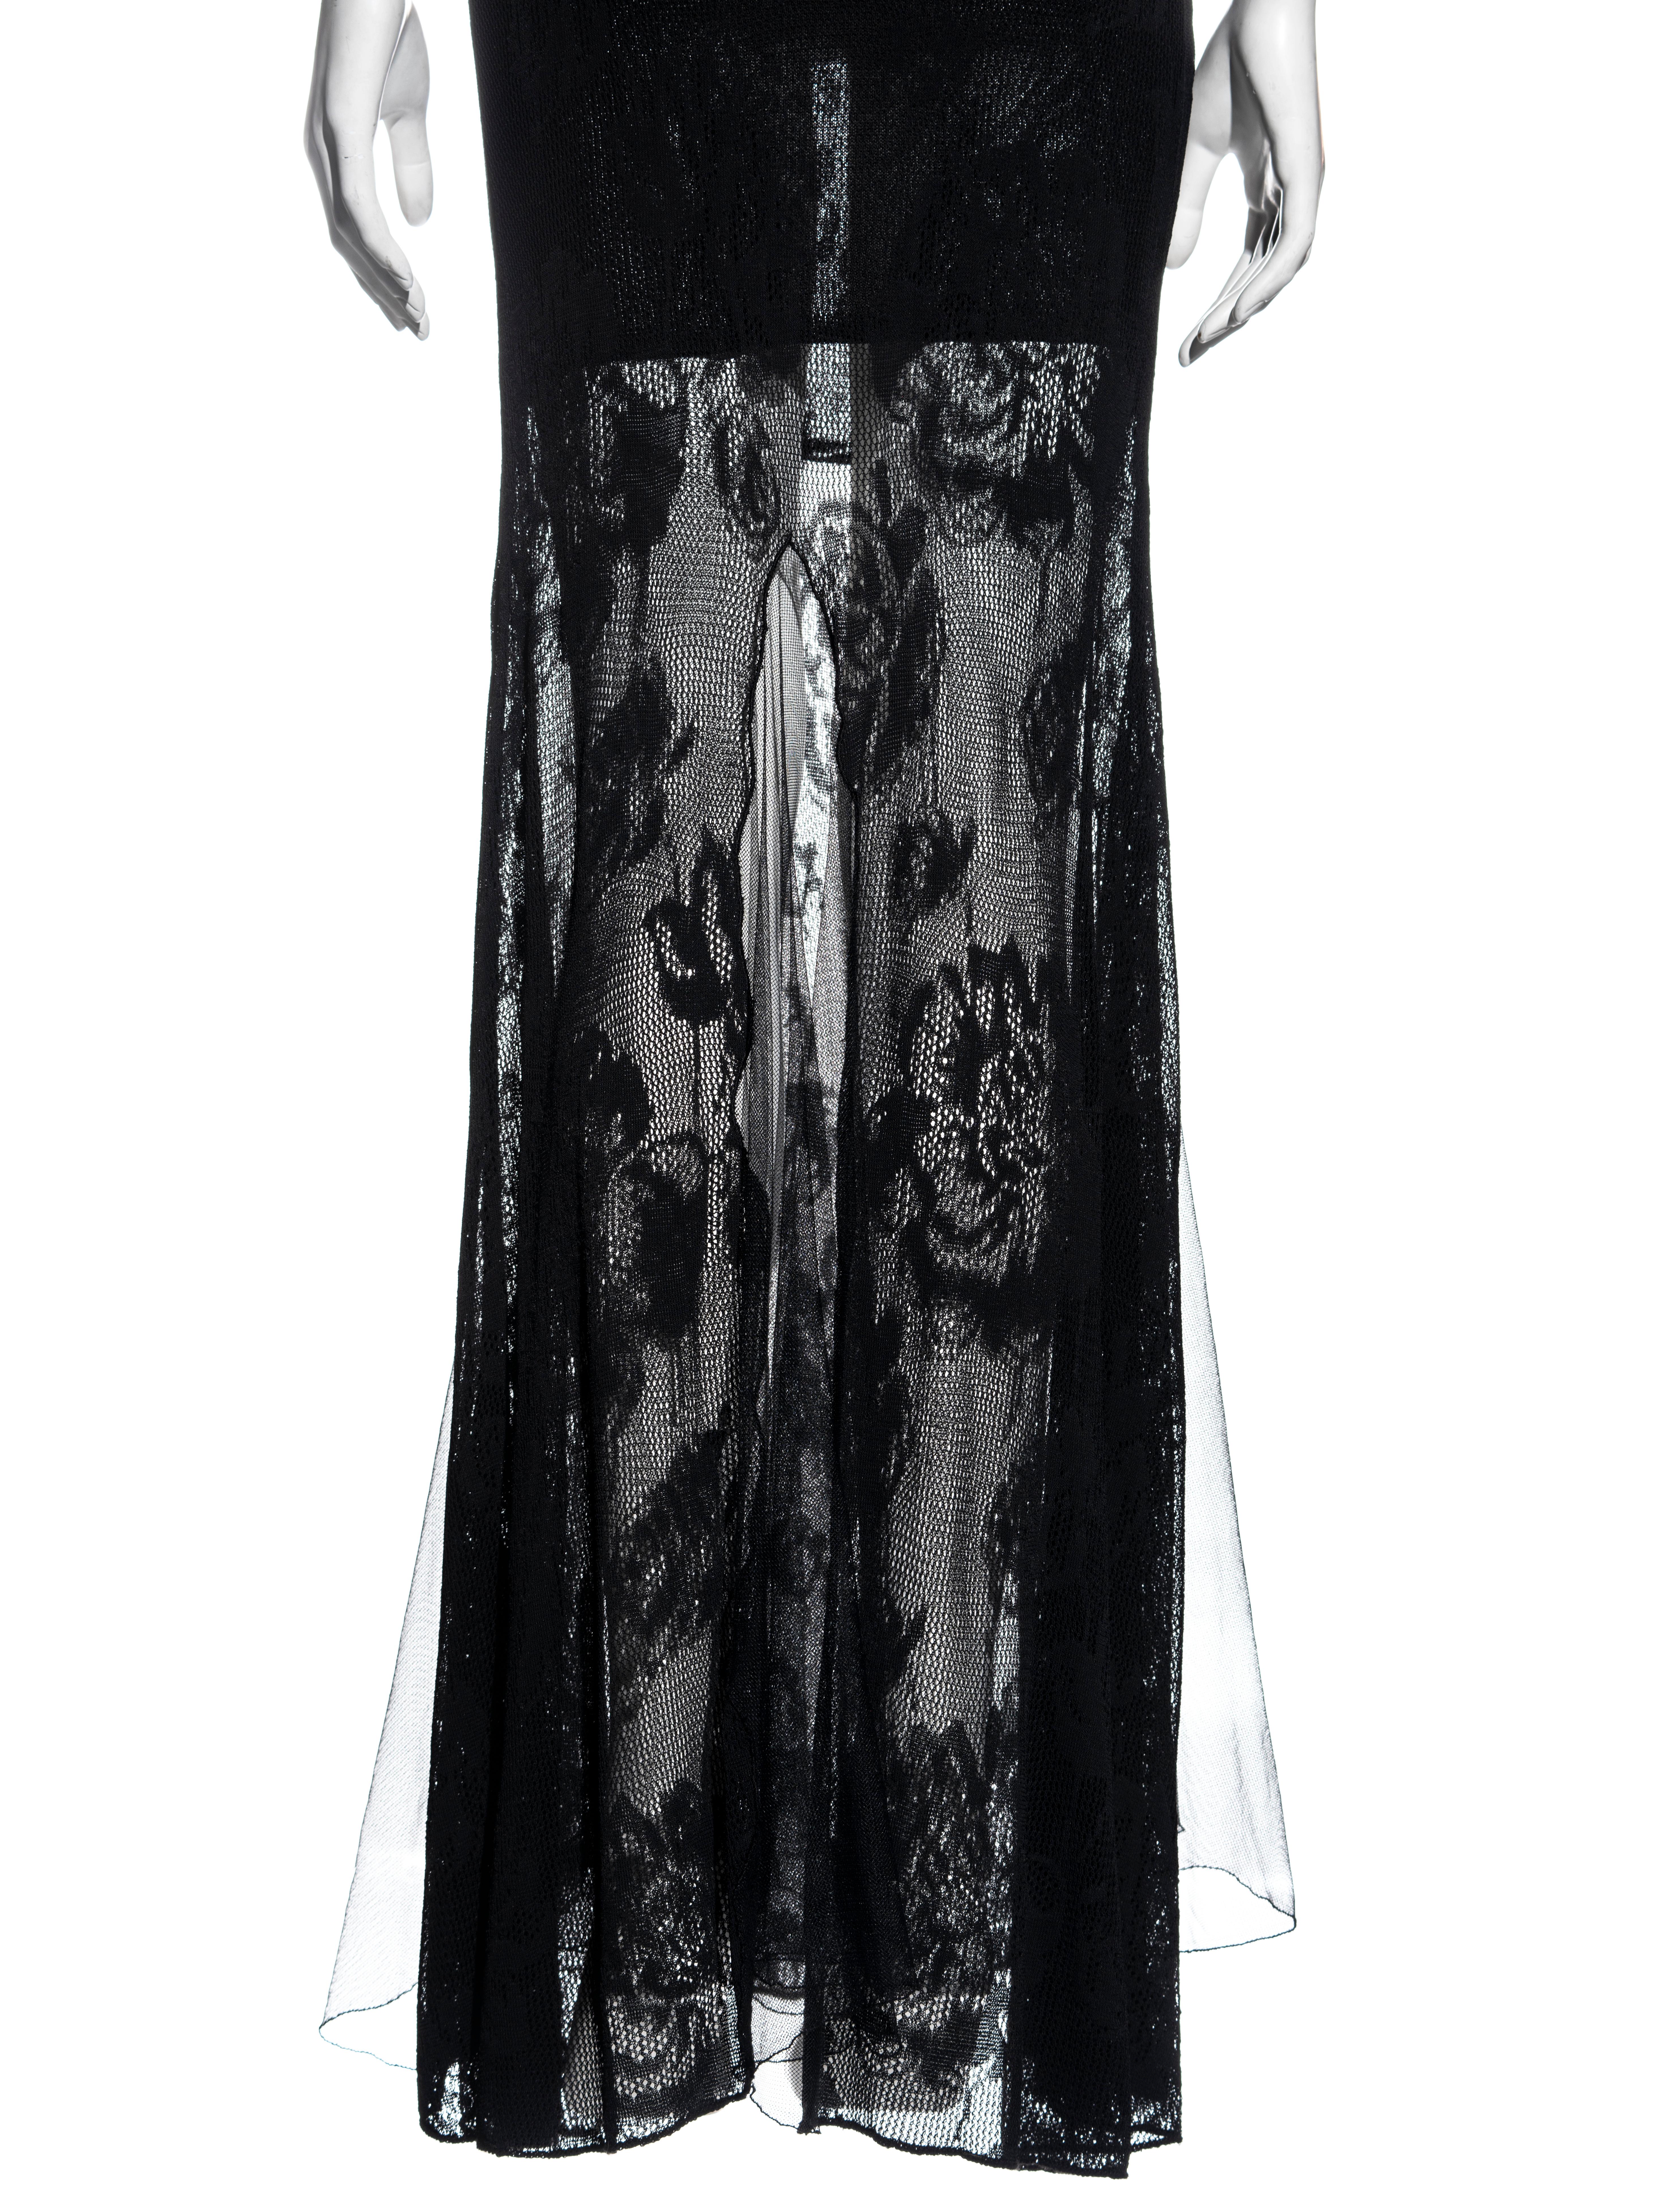 Black Christian Dior by John Galliano black viscose knit lace evening dress, ss 2002